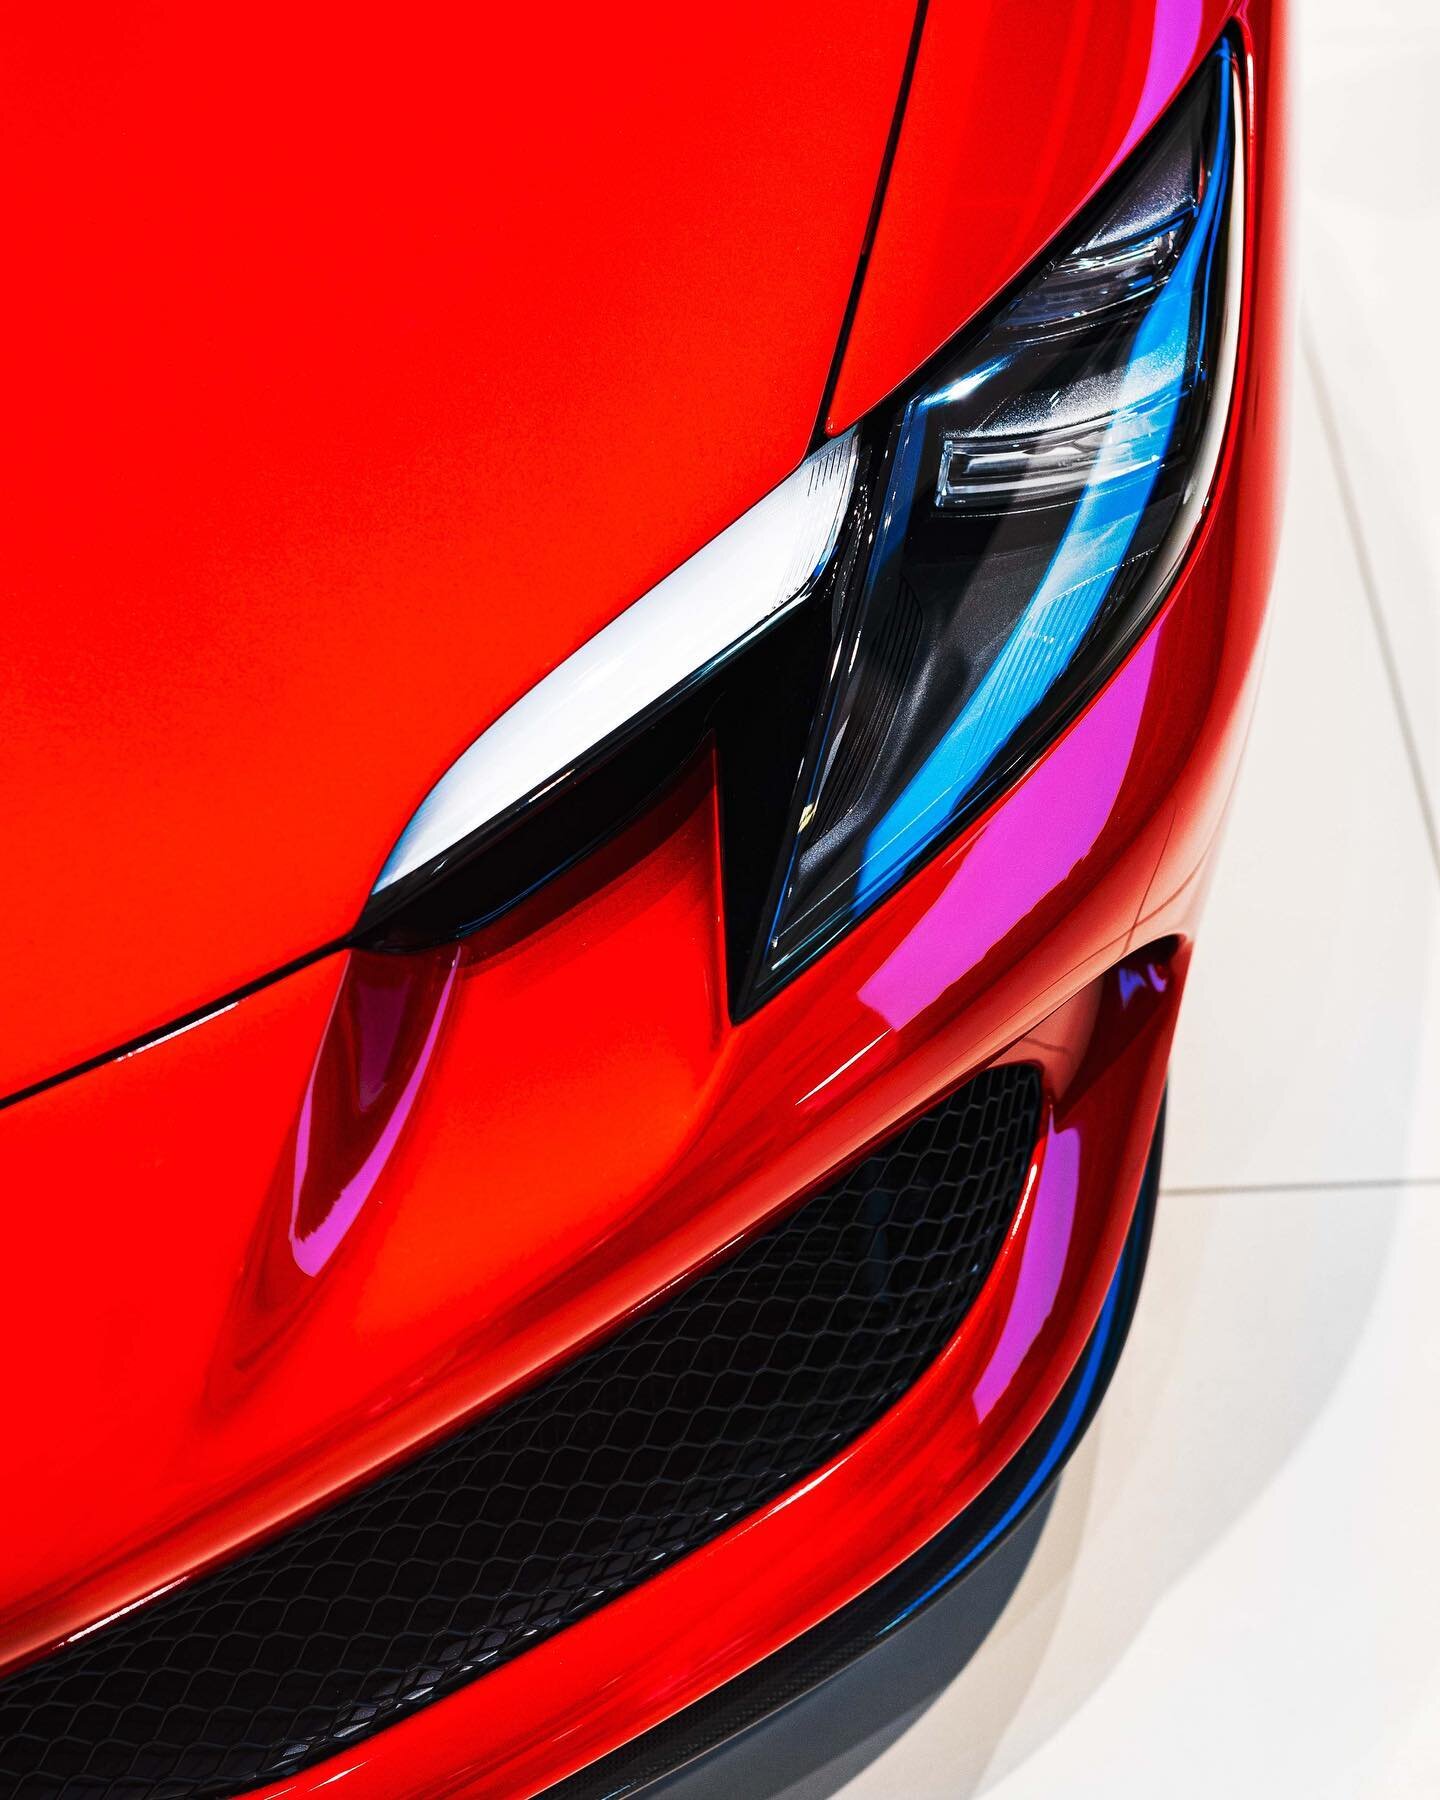 Ferrari GTB commercial shoot 

#zcame2 #6k 

&bull;&bull;&bull;

#auto #autodetailing #automotive #autos #automotivo #autodetail #tagstagram #tagsta_auto  #tagsta #tagstagramers #automobiles #automobile #automotivedesign #autoworld #autosport #cars #